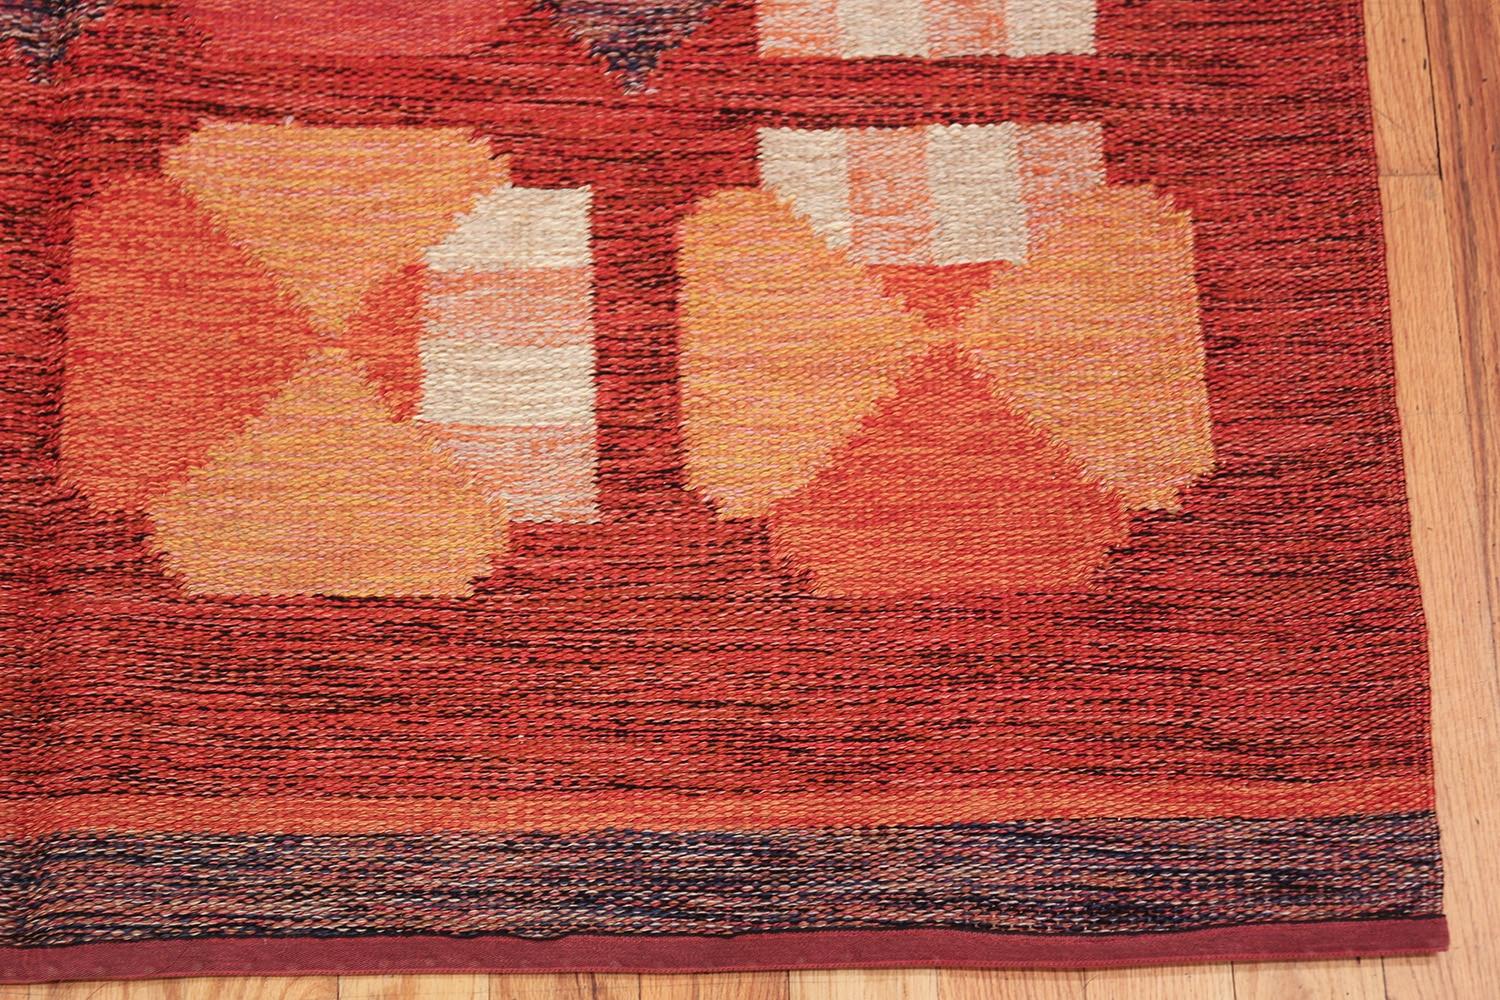 Scandinavian Modern Vintage Finnish Carpet by Alestalon Mattokutomo. Size: 5 ft 4 in x 7 ft 9 in